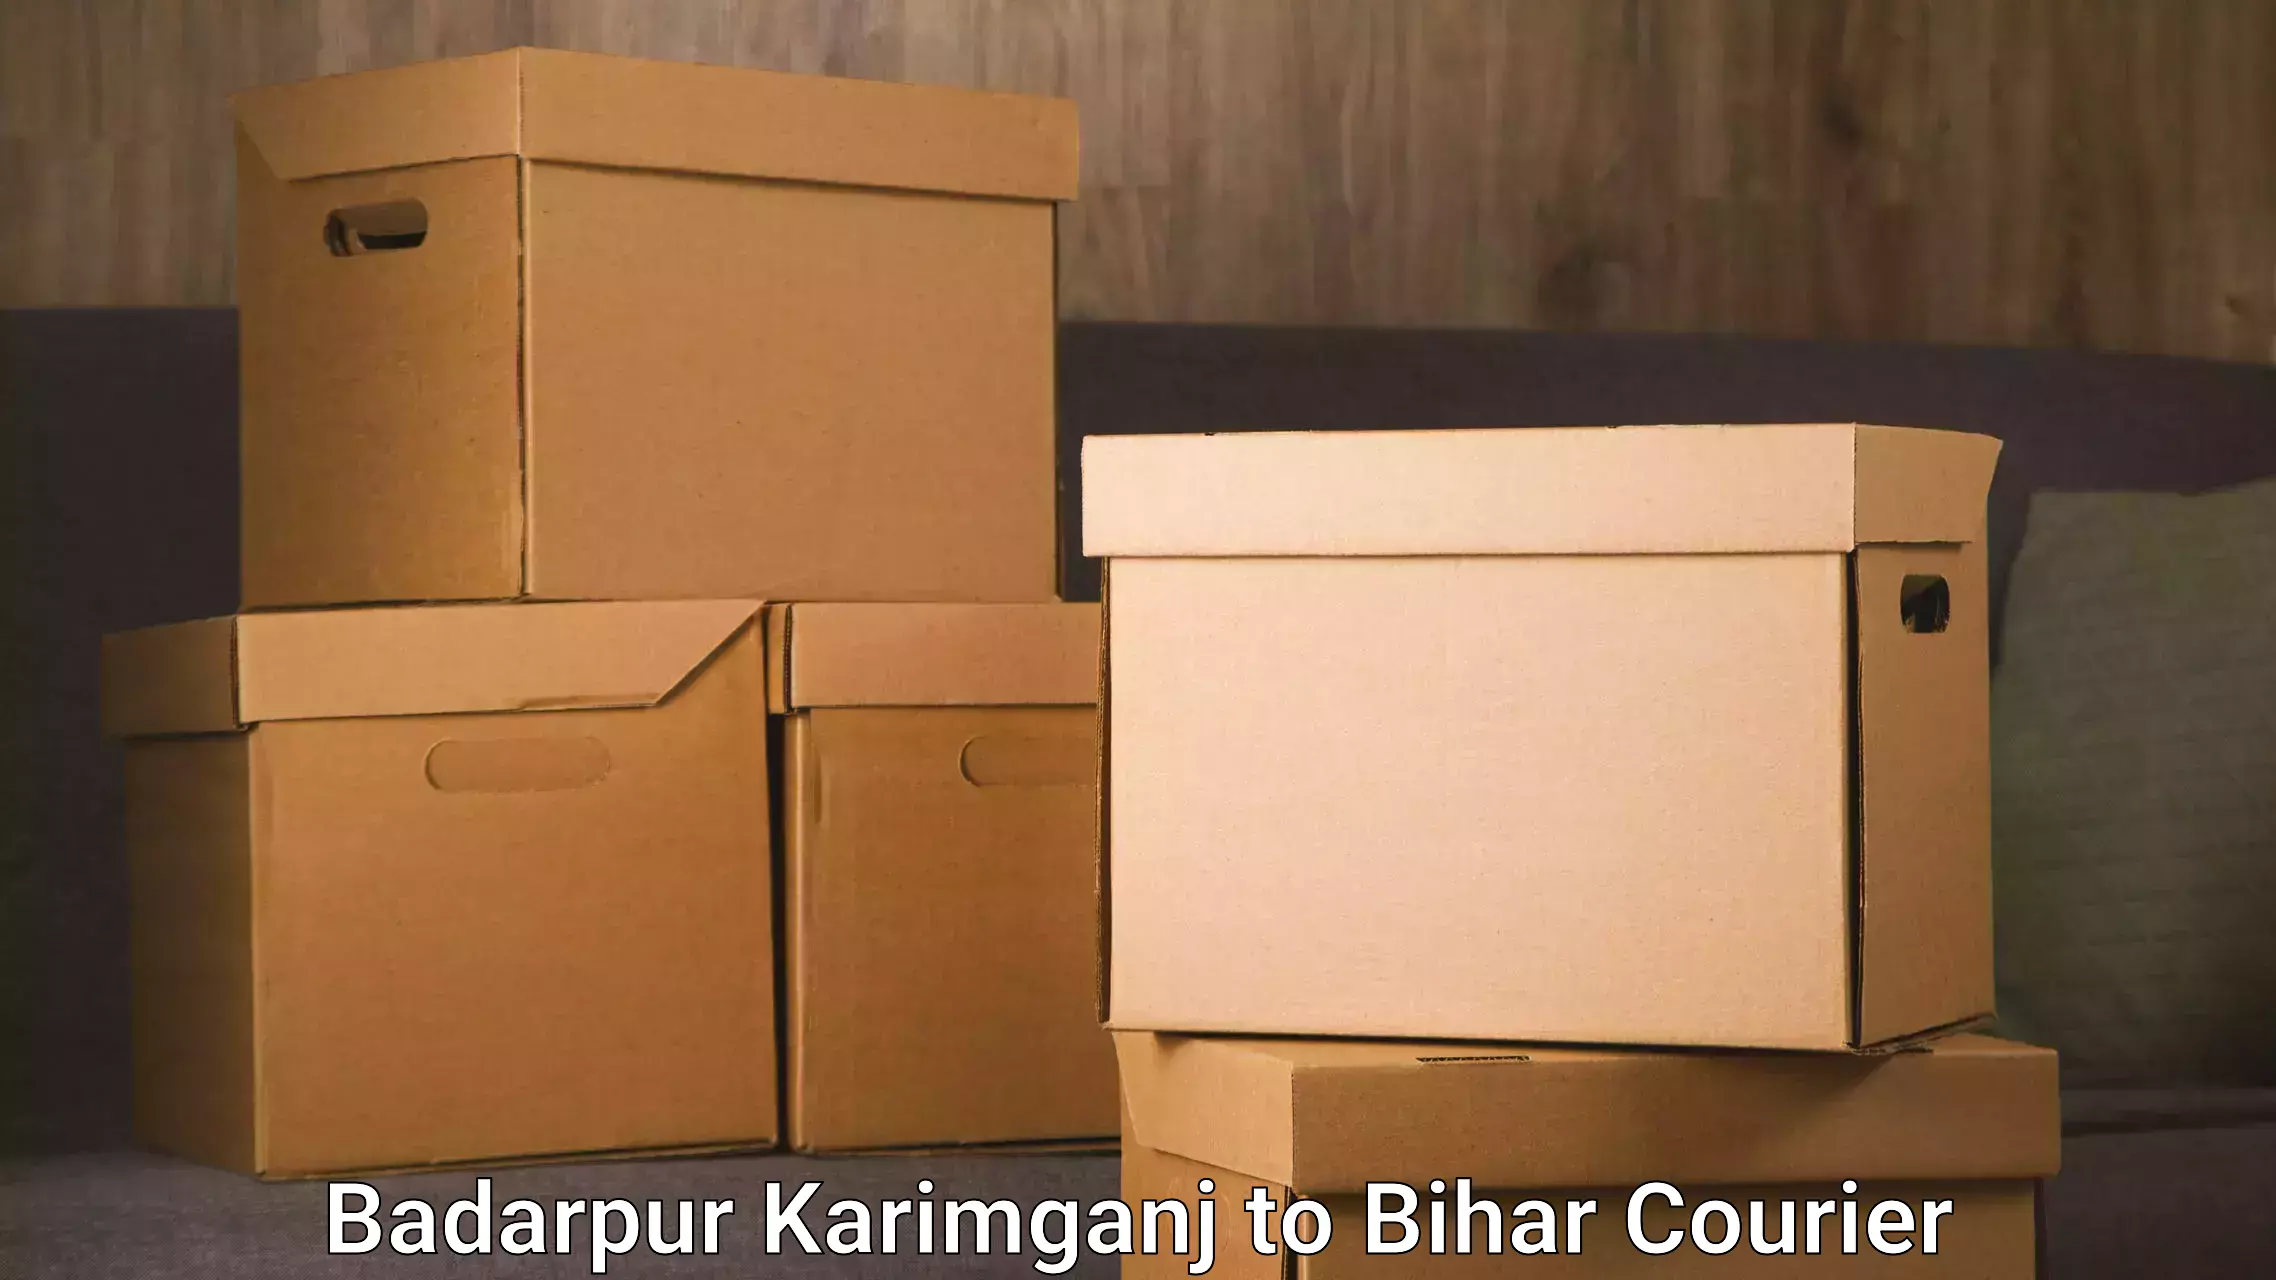 Global courier networks Badarpur Karimganj to Darbhanga